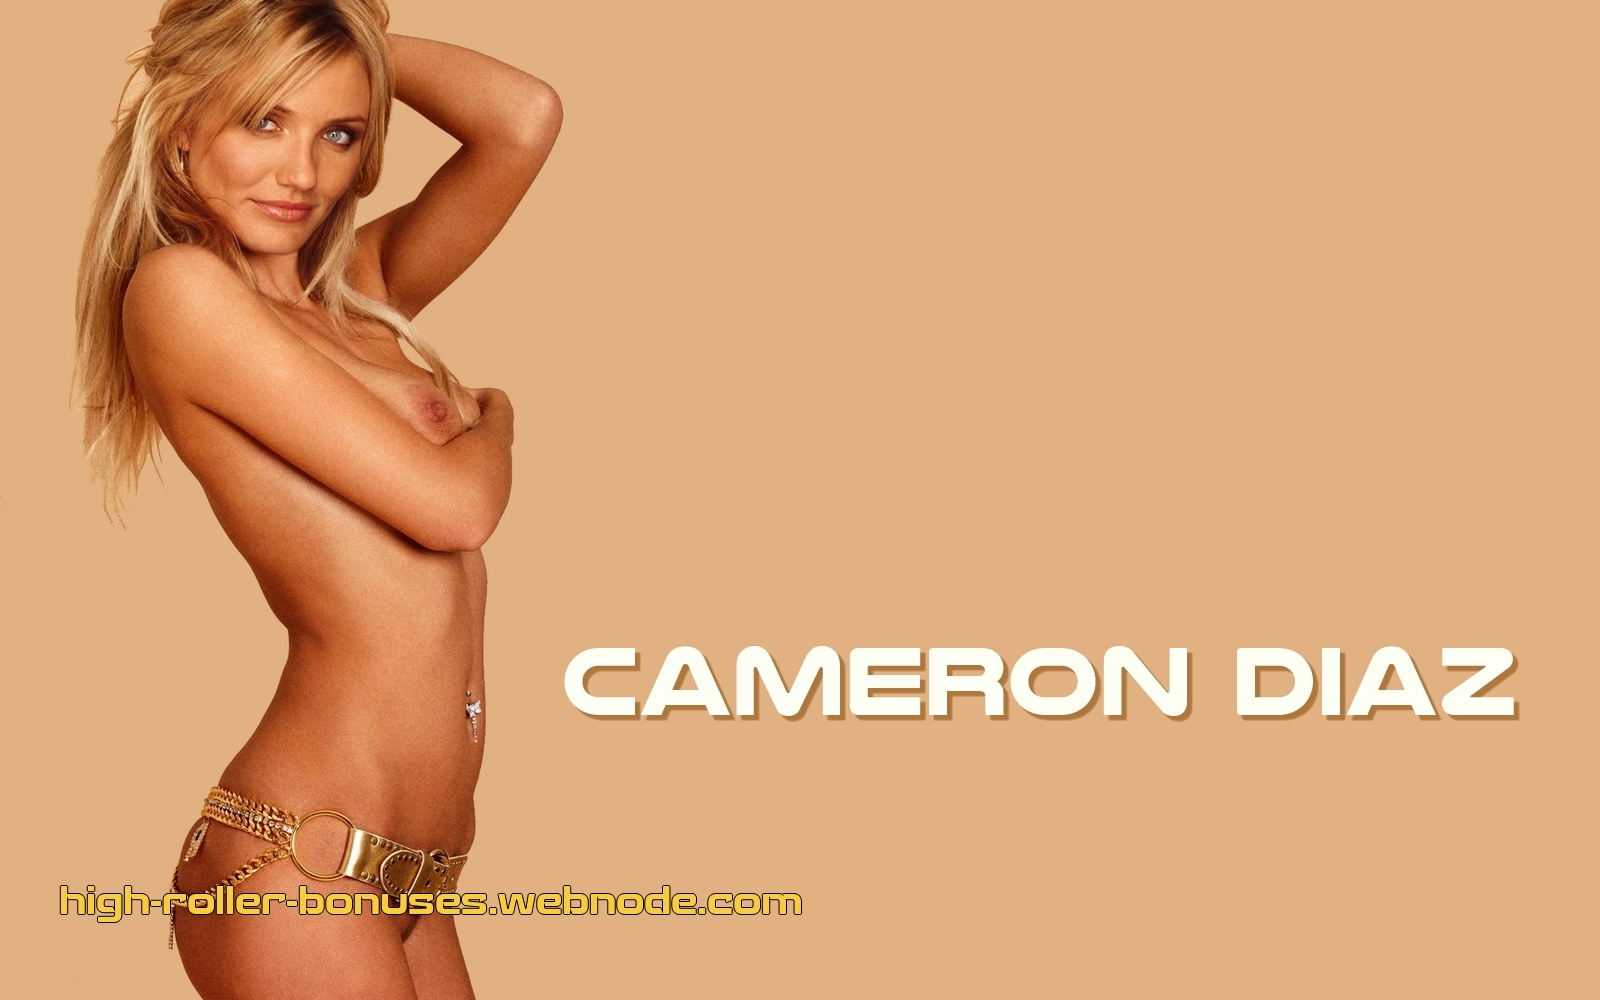 Cameron diaz sexy images